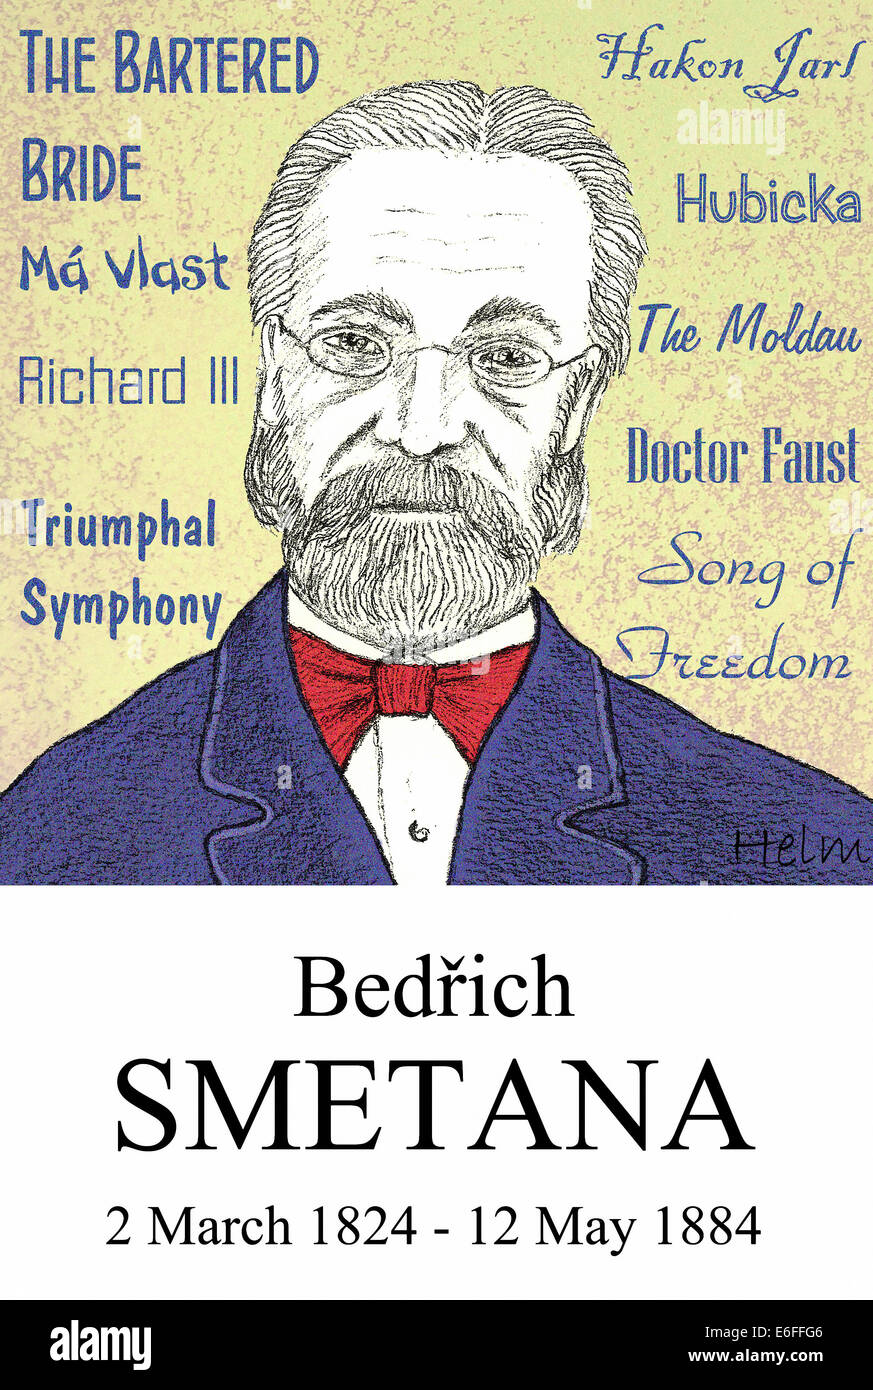 Bedrich Smetana, 1824-1884, Czech composer, portrait, illustration Stock  Photo - Alamy